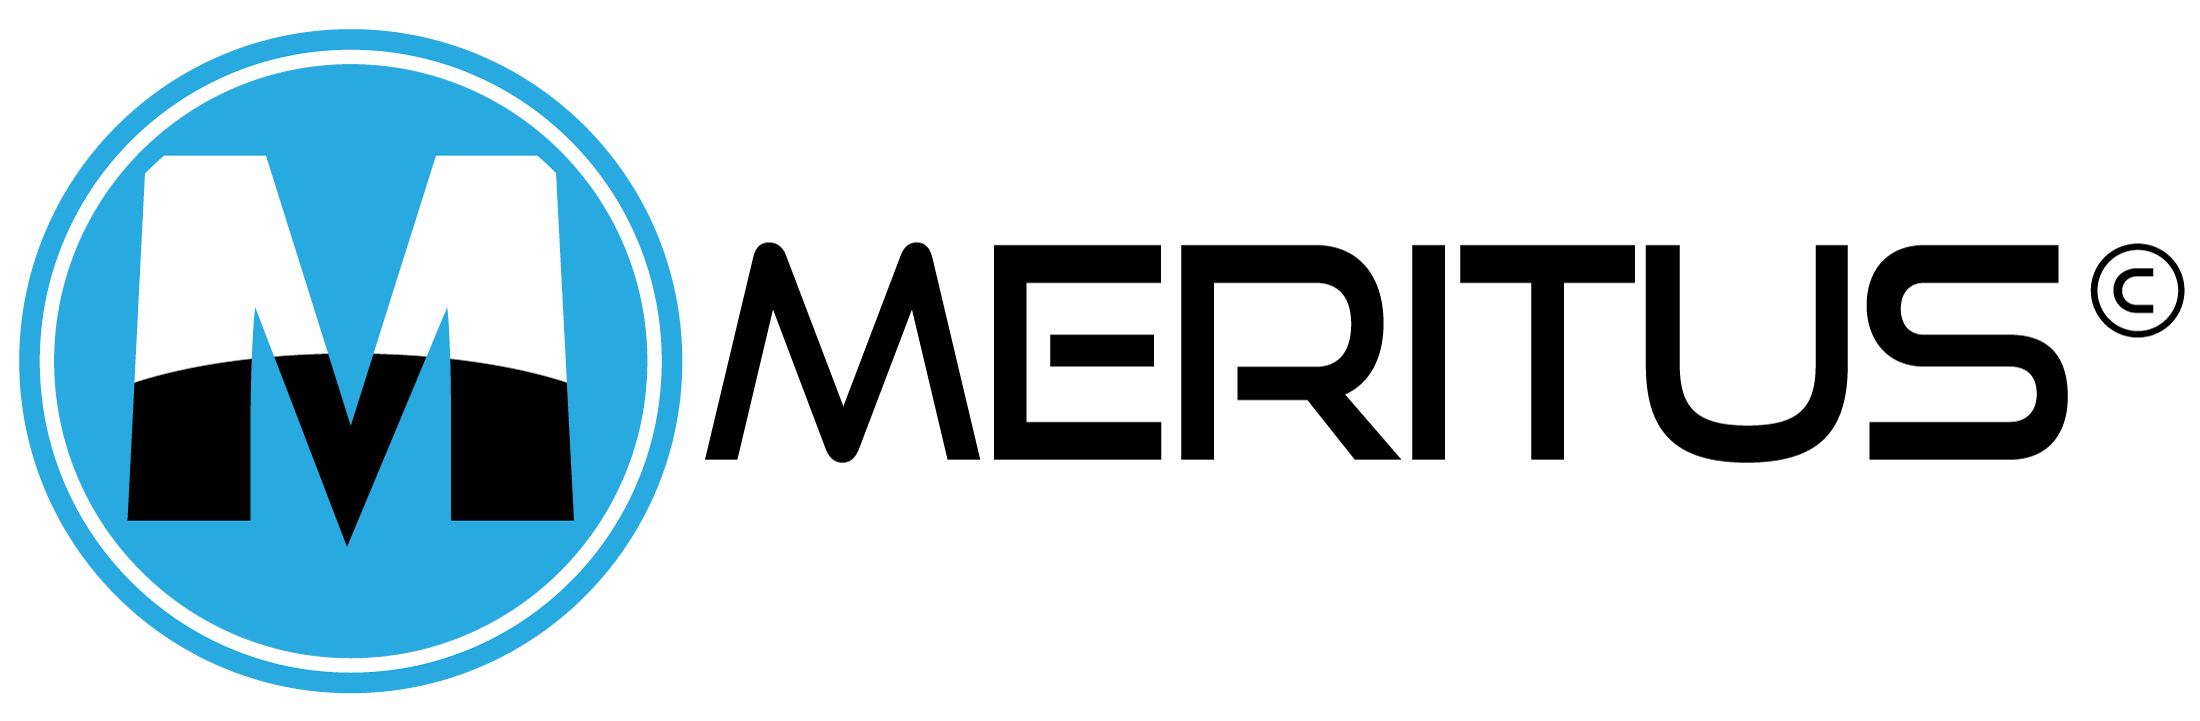 MERIT logo